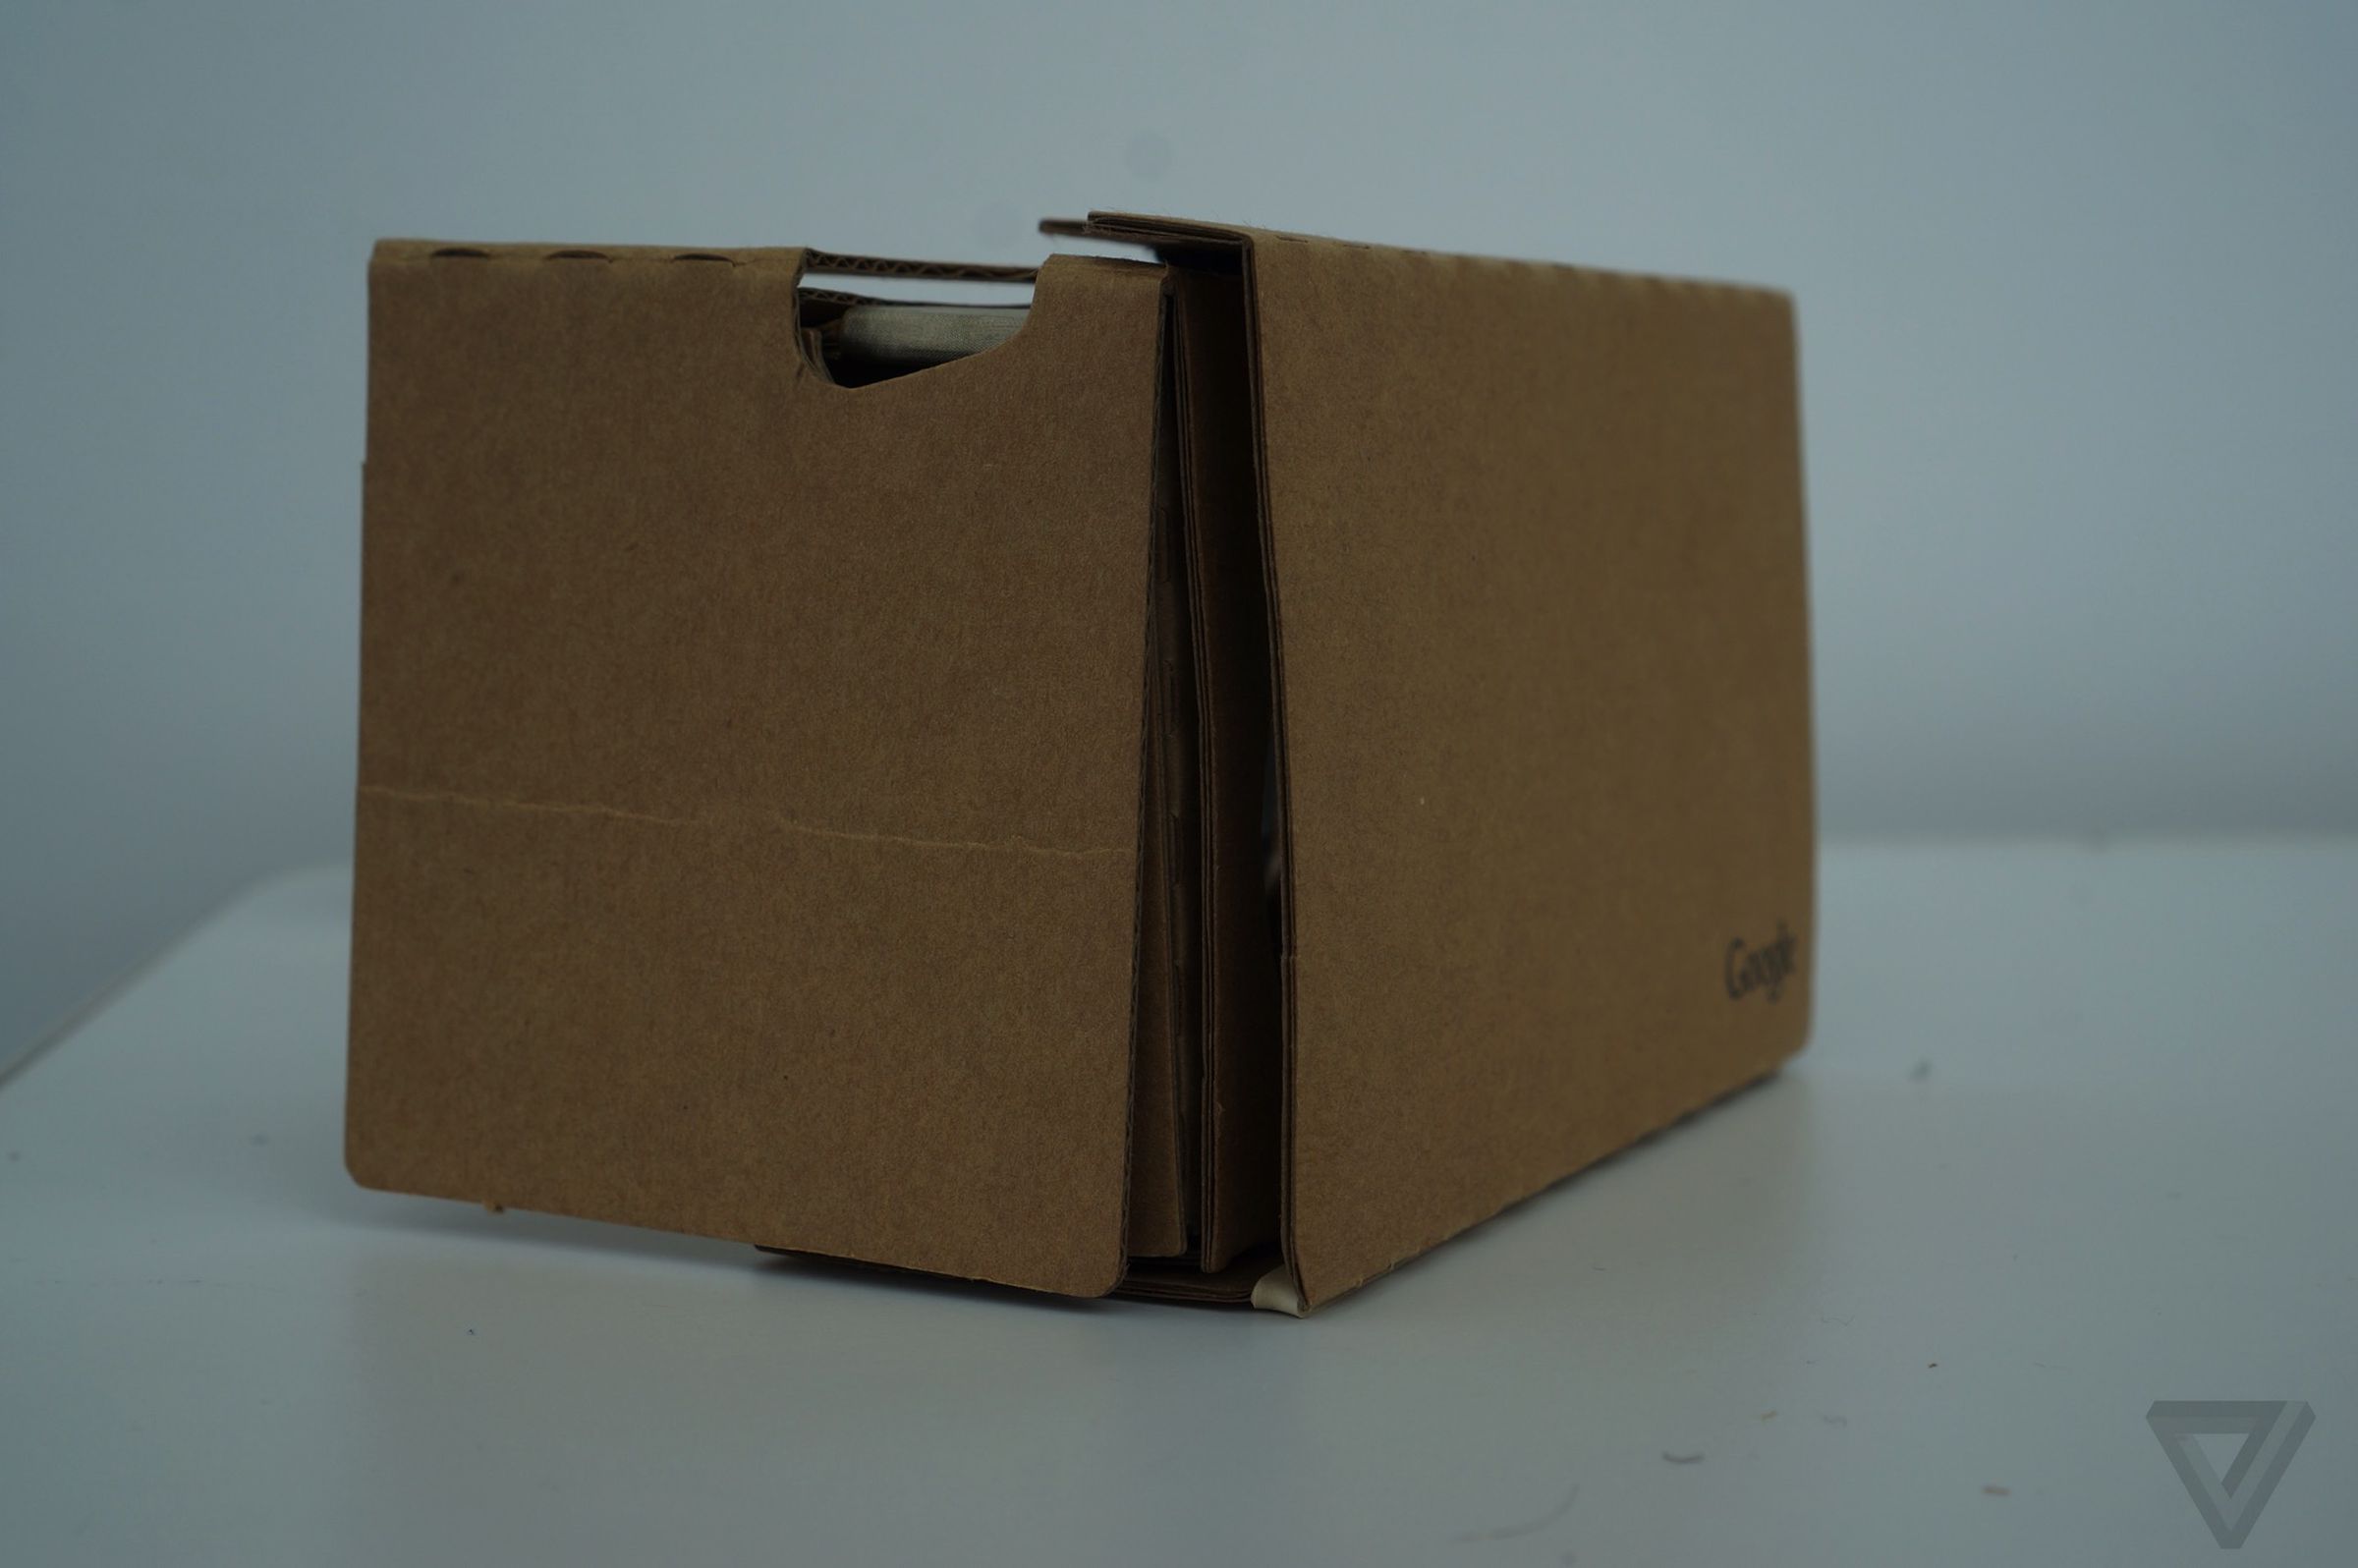 Google's new Cardboard hardware